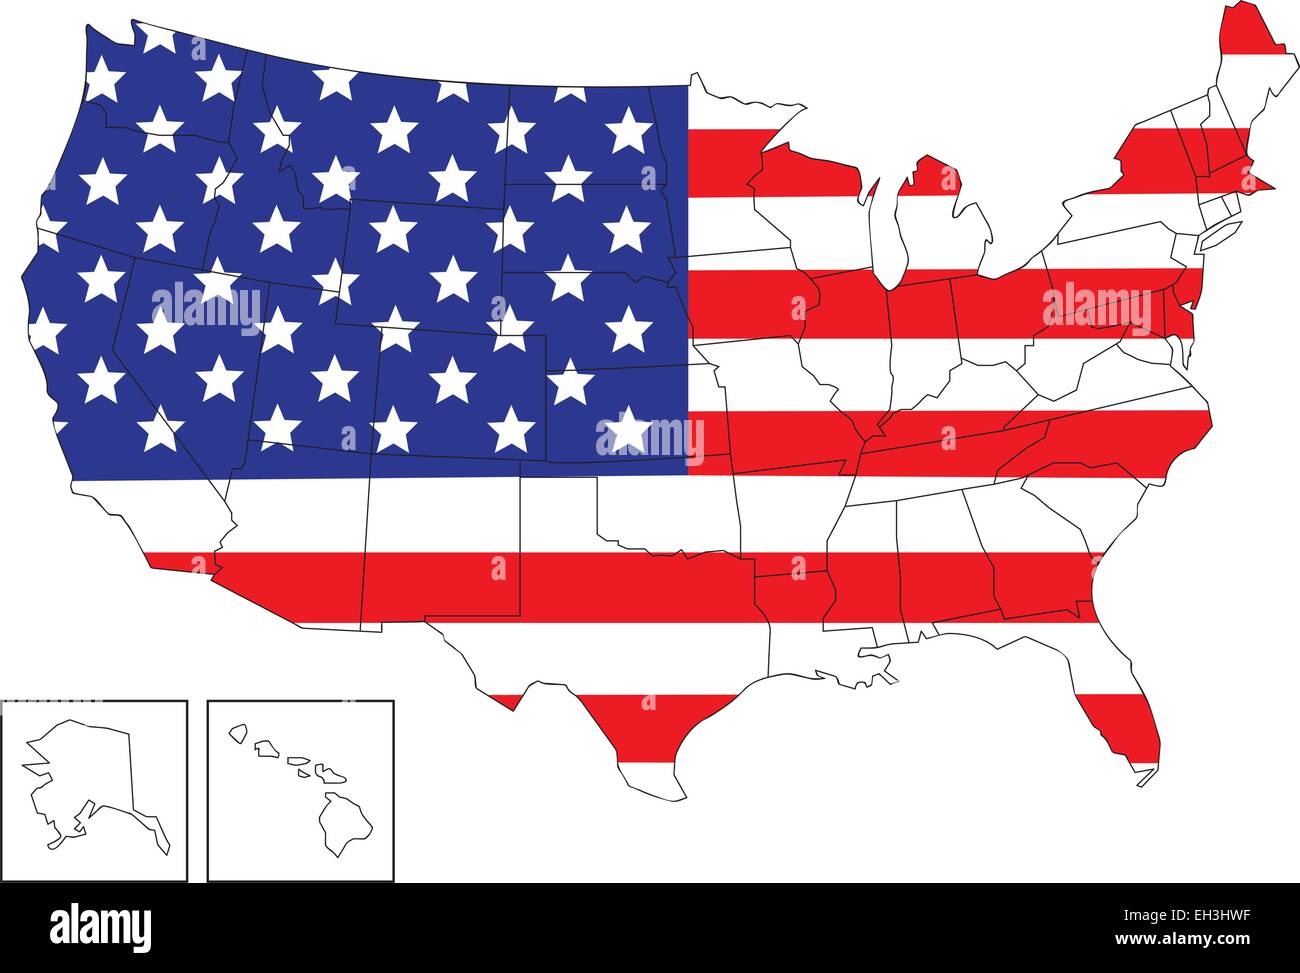 USA map with states and borders. USA flag inside. Stock Vector